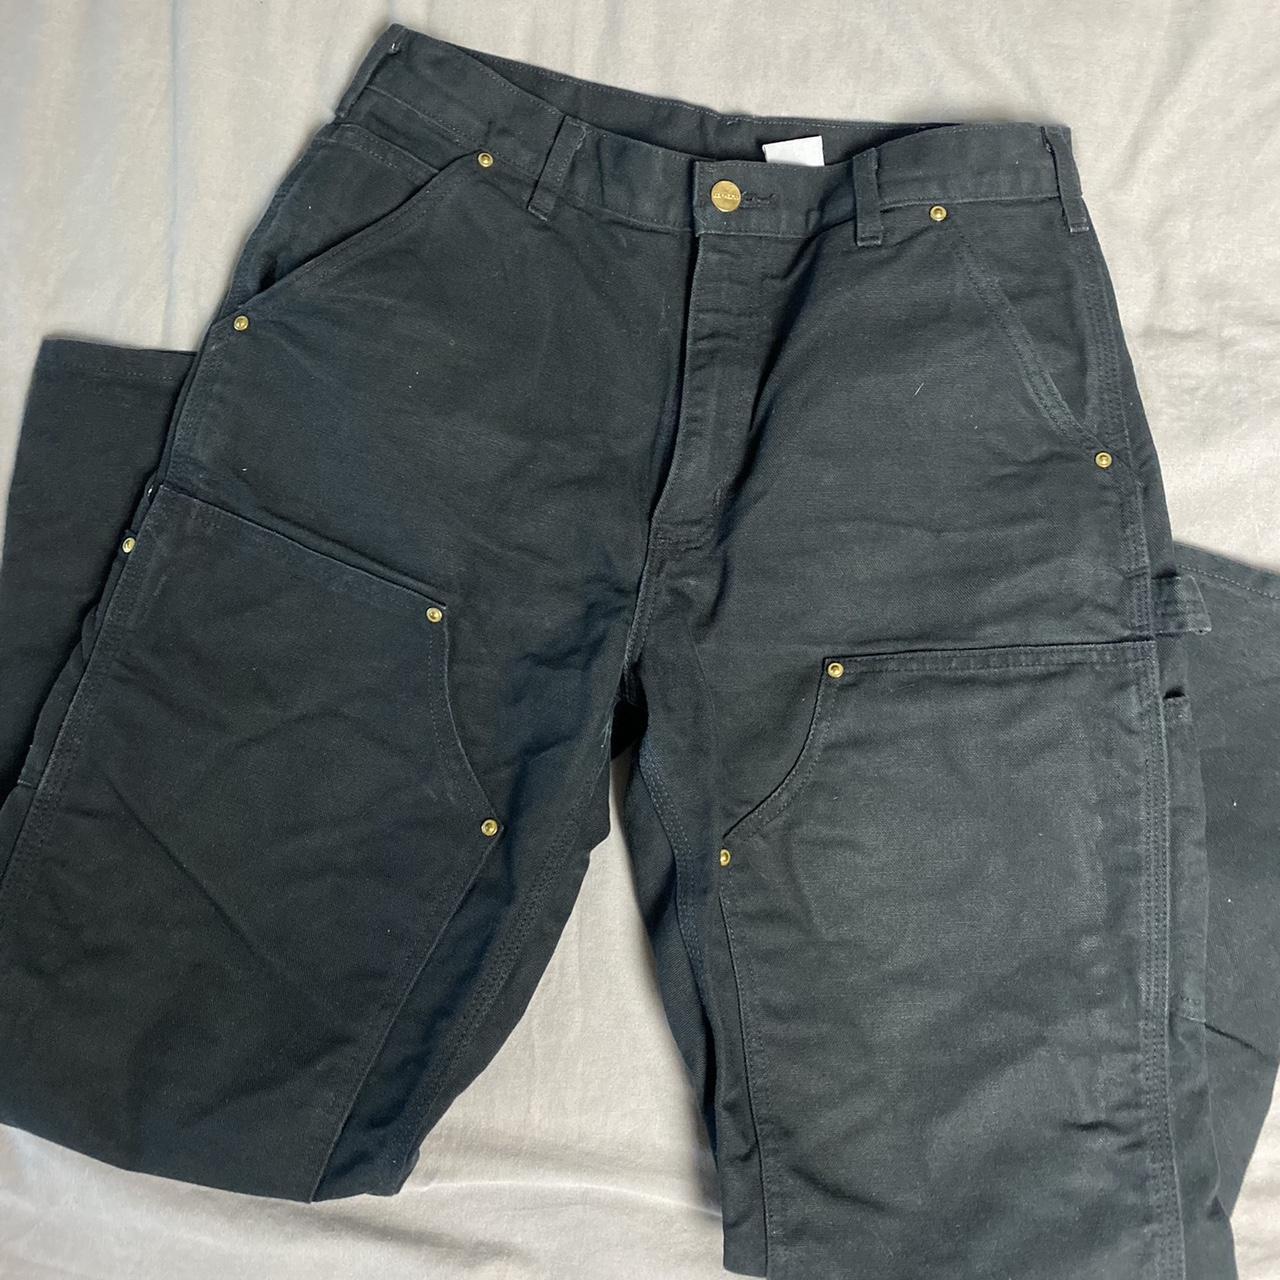 Vintage black carhartt double knee jeans 32 x 30... - Depop